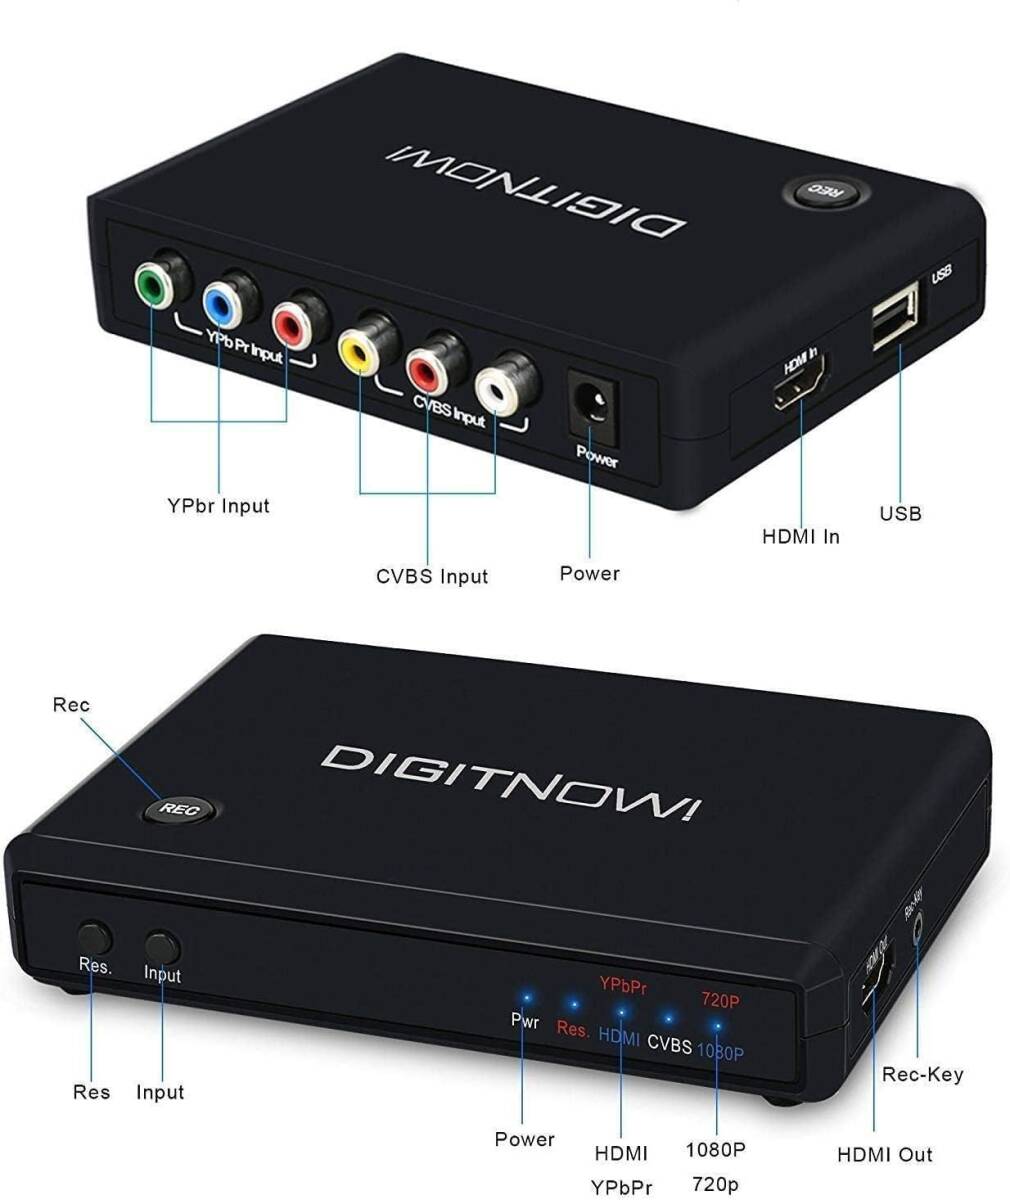 HDゲームキャプチャ/HDMIビデオコンバータ/レコーダー PS4 Xbox One/Xbox 360 LiveTV PVR DVRなど HDMI/CVBS入力とHDMI出力に対応 フルHD _画像2